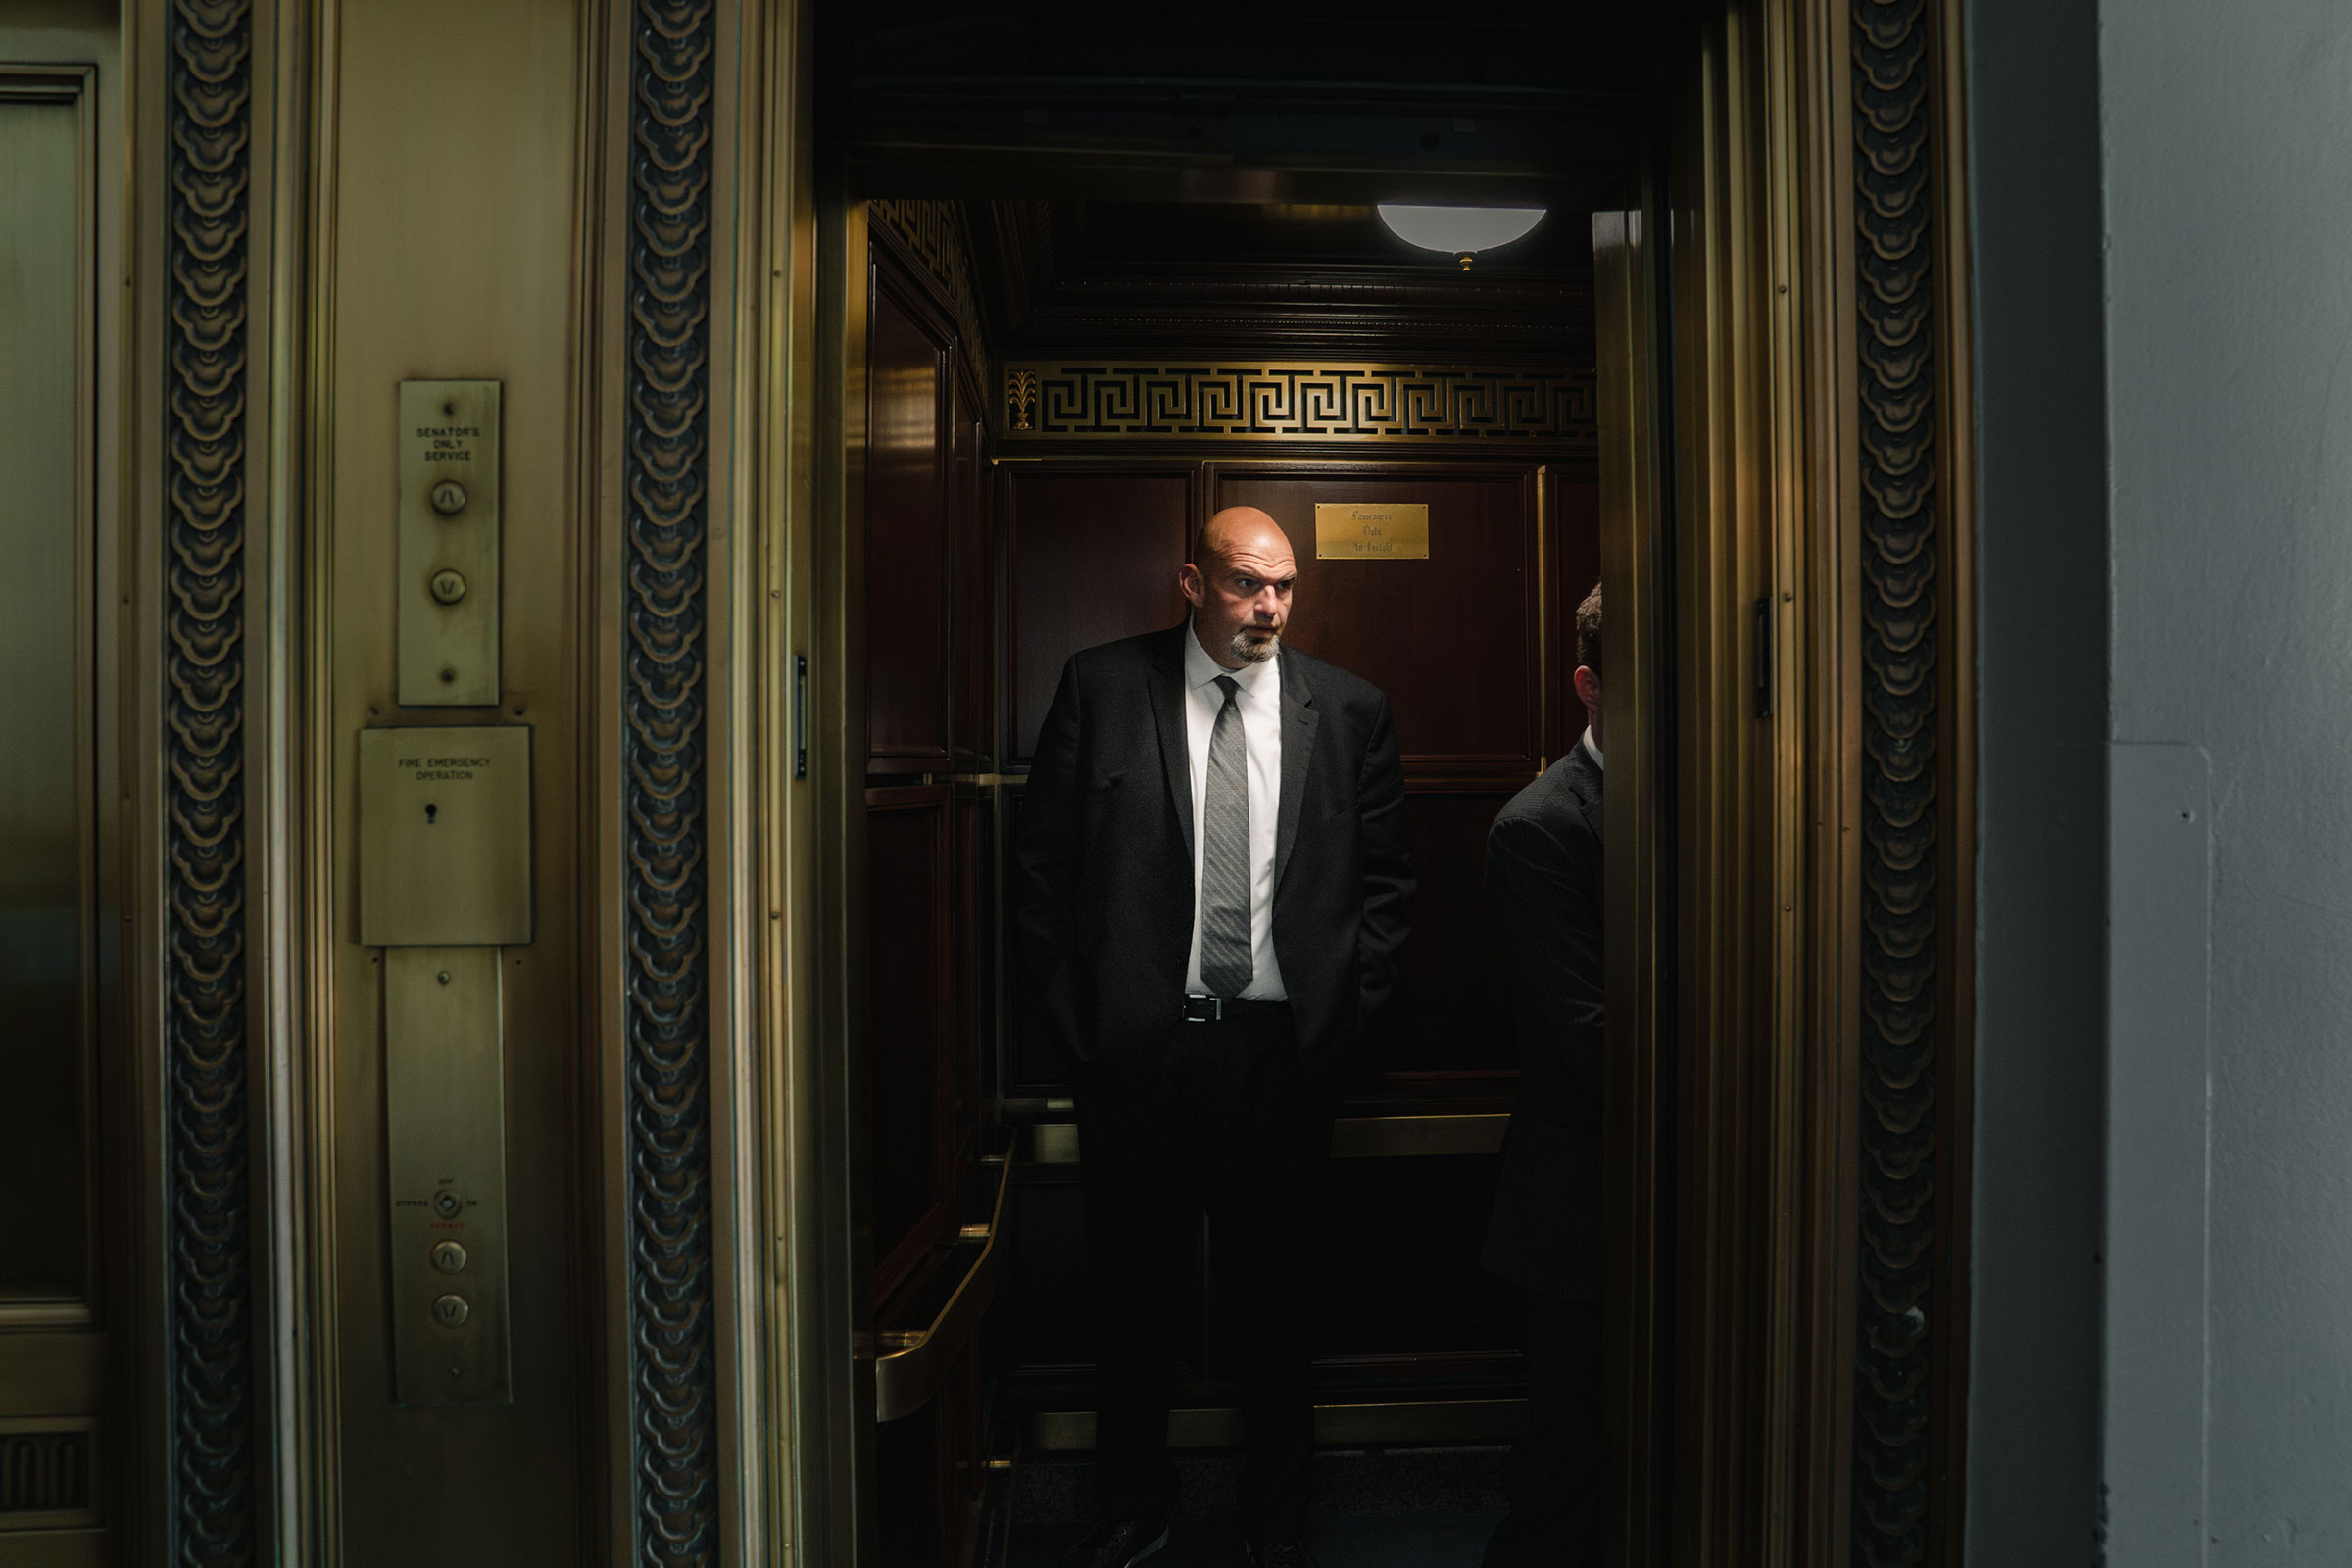 Senator John Fetterman stands in an elevator on capitol hill